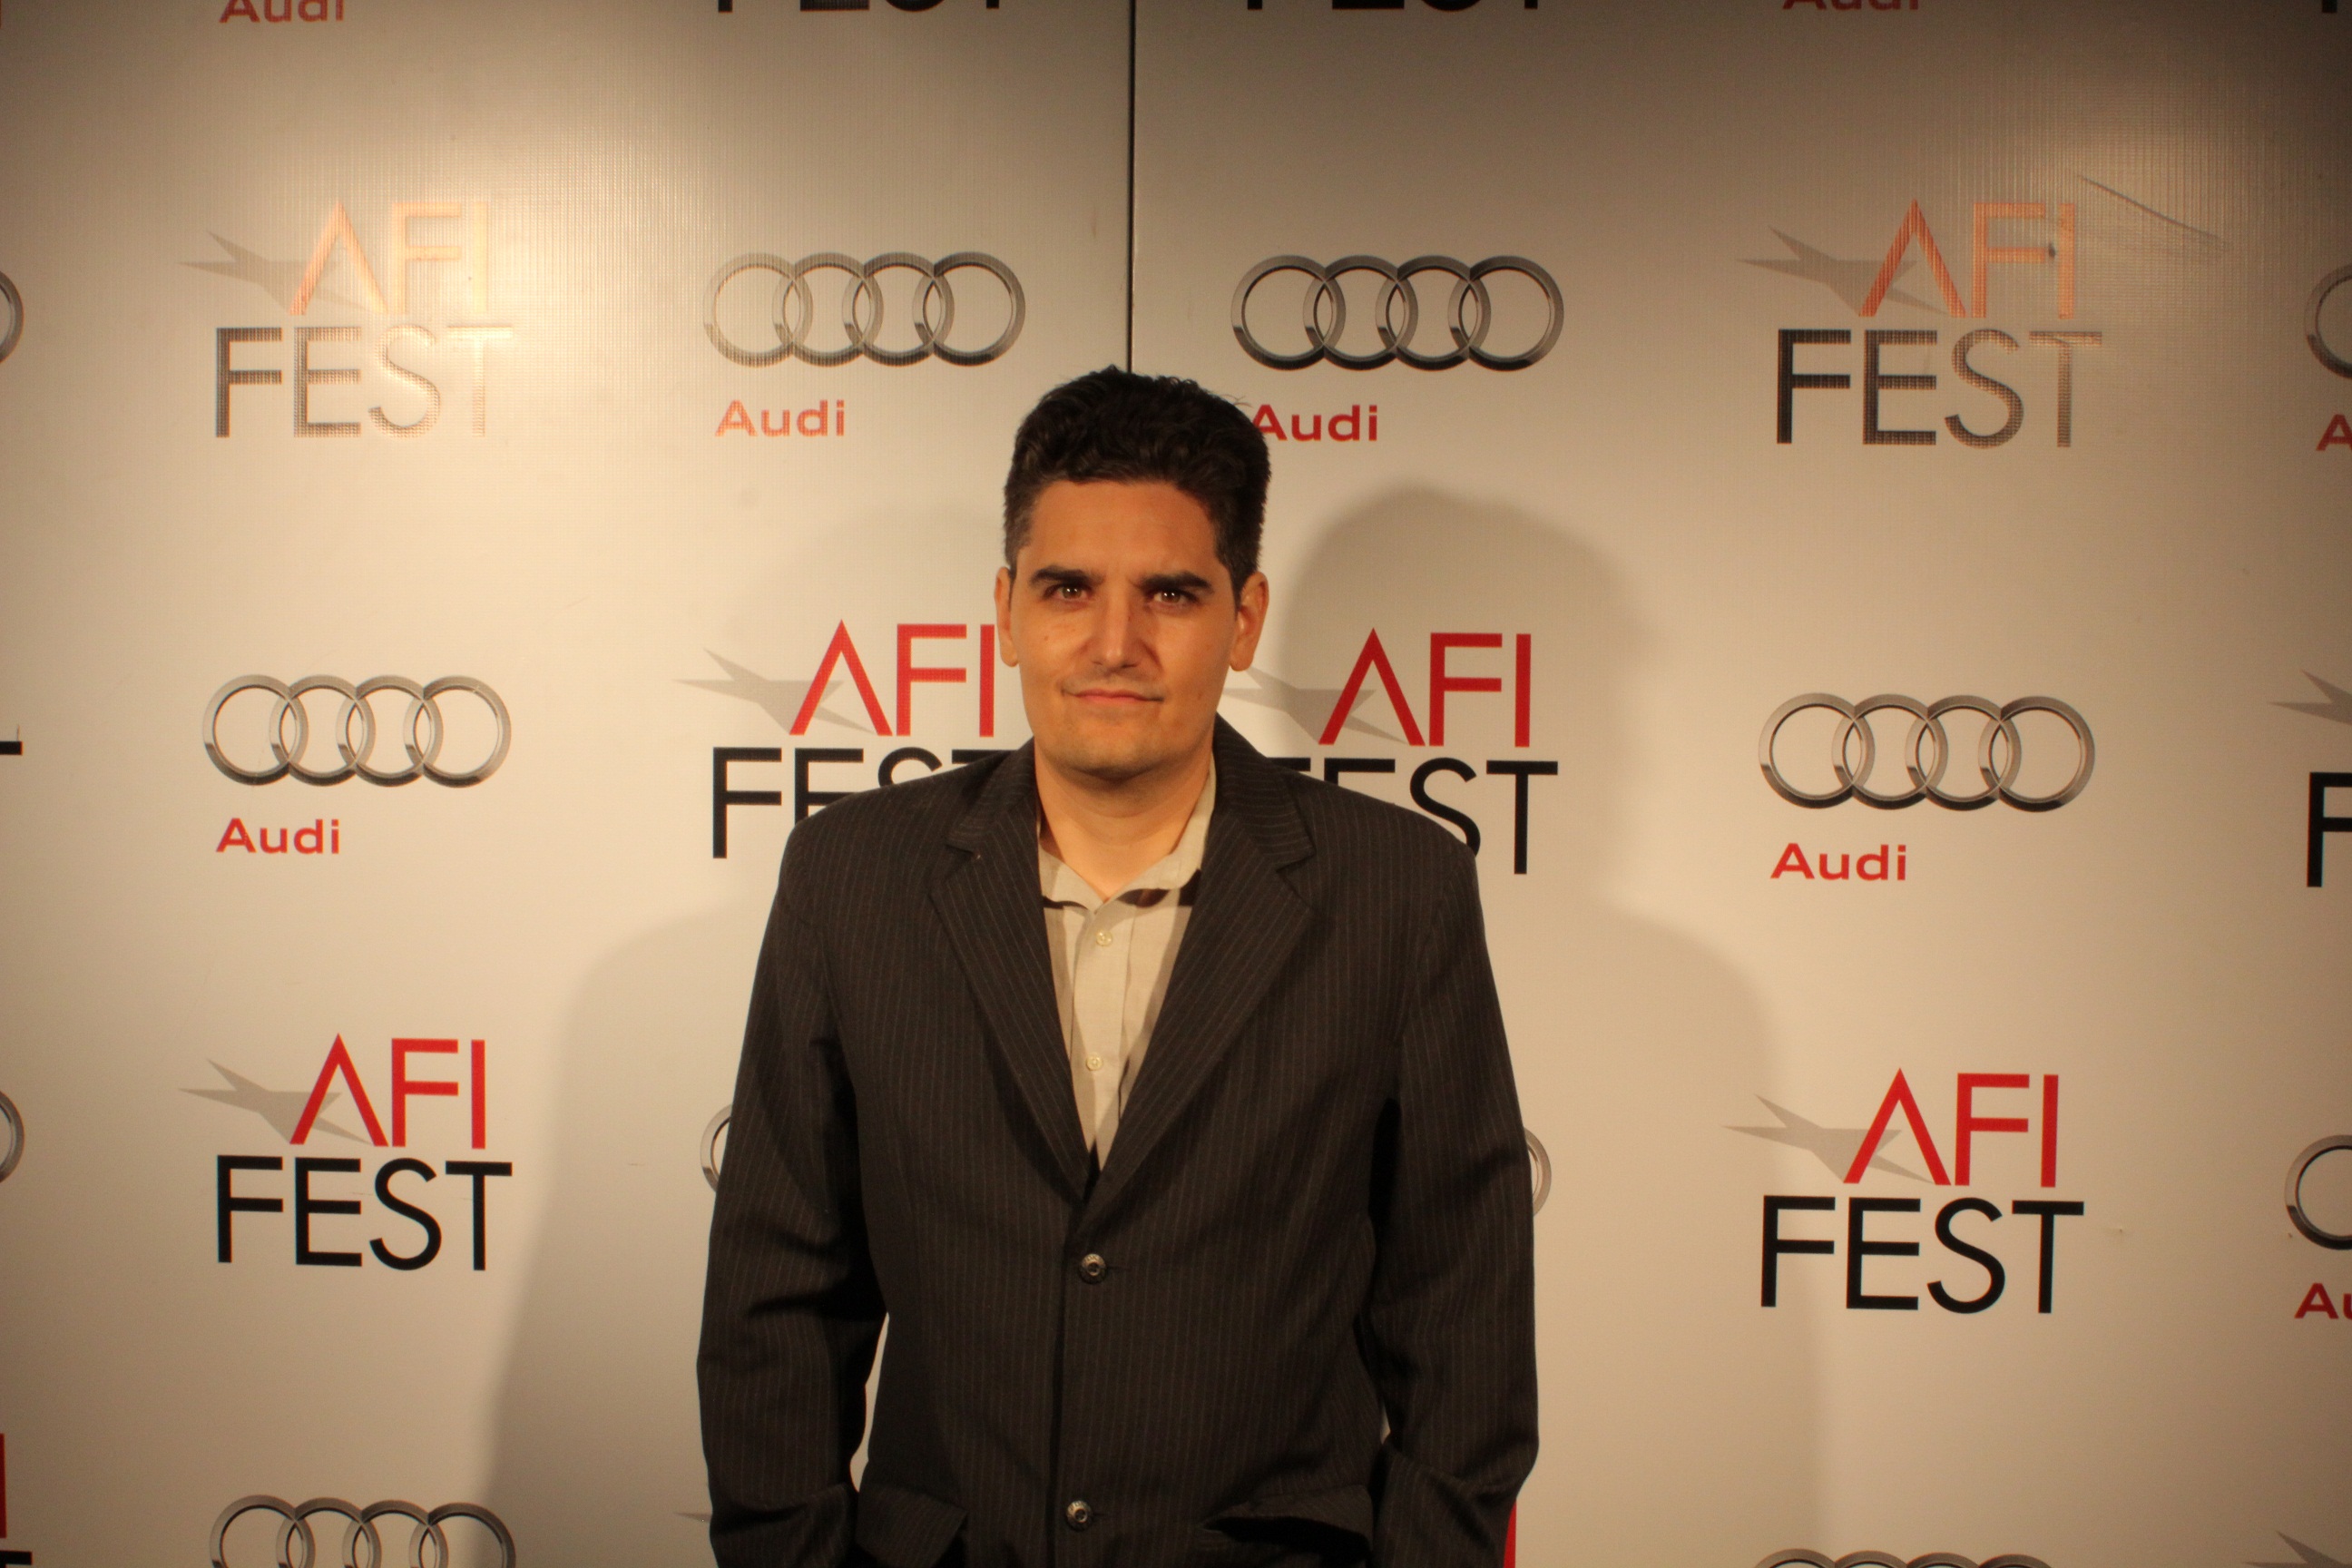 James Inez at the AFI Film Fest1.